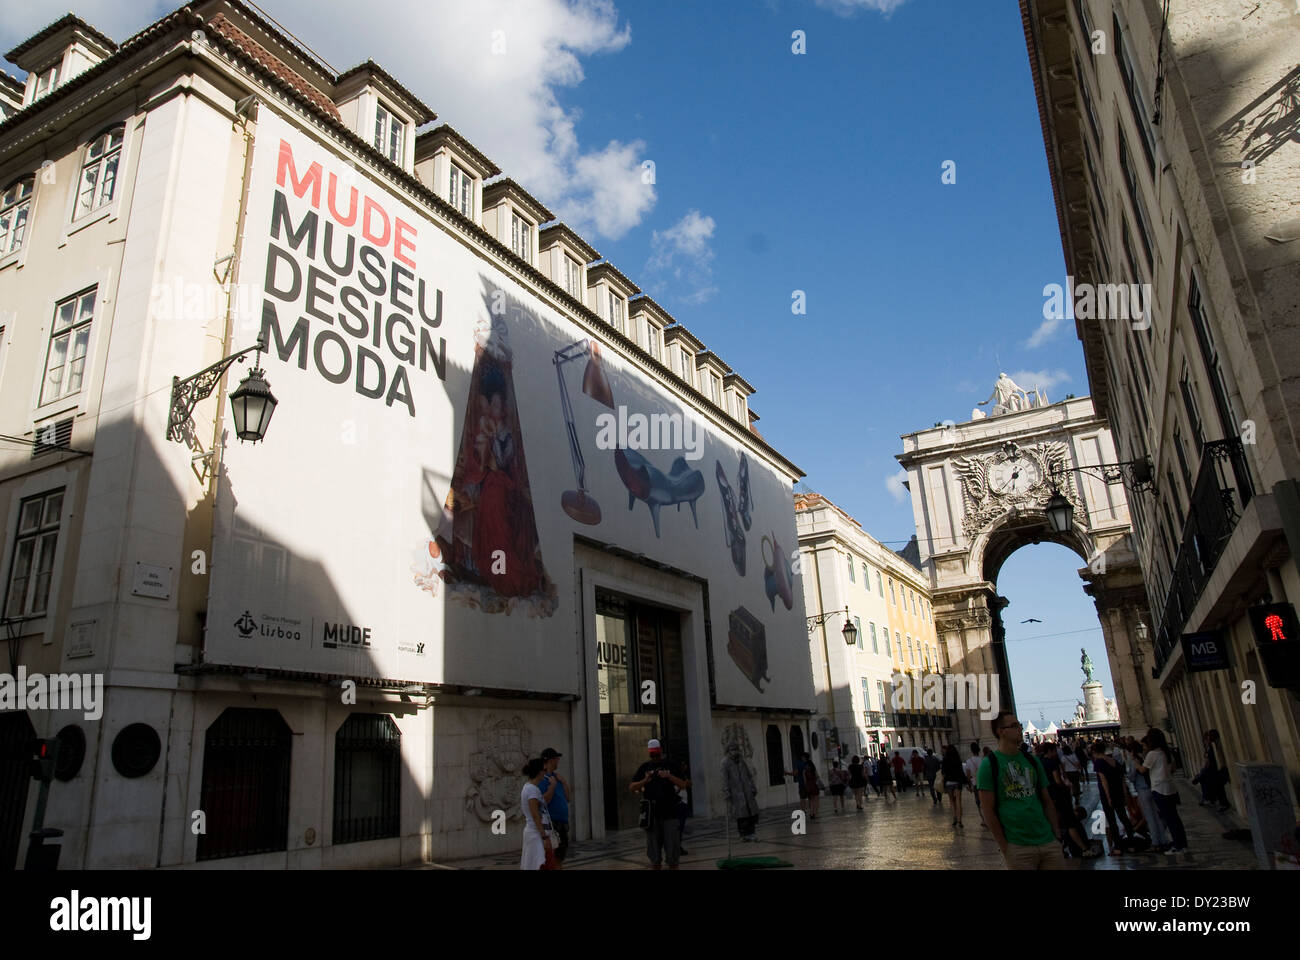 Lisbon, Mude Museu Design Moda Stock Photo